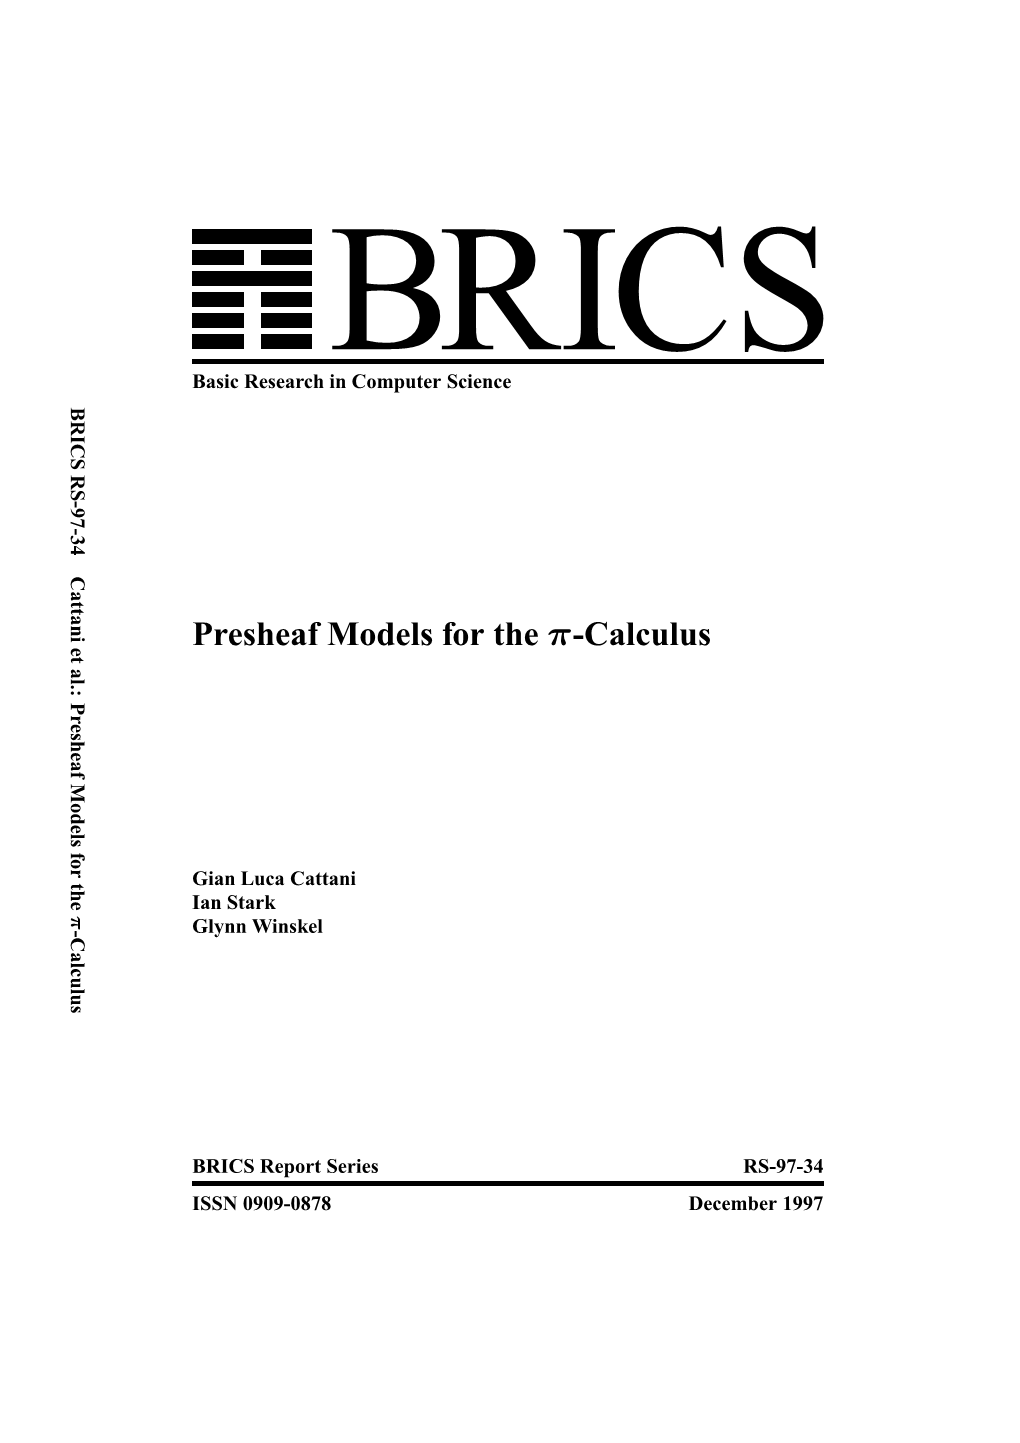 Presheaf Models for the Π-Calculus Copyright C 1997, BRICS, Department of Computer Science University of Aarhus